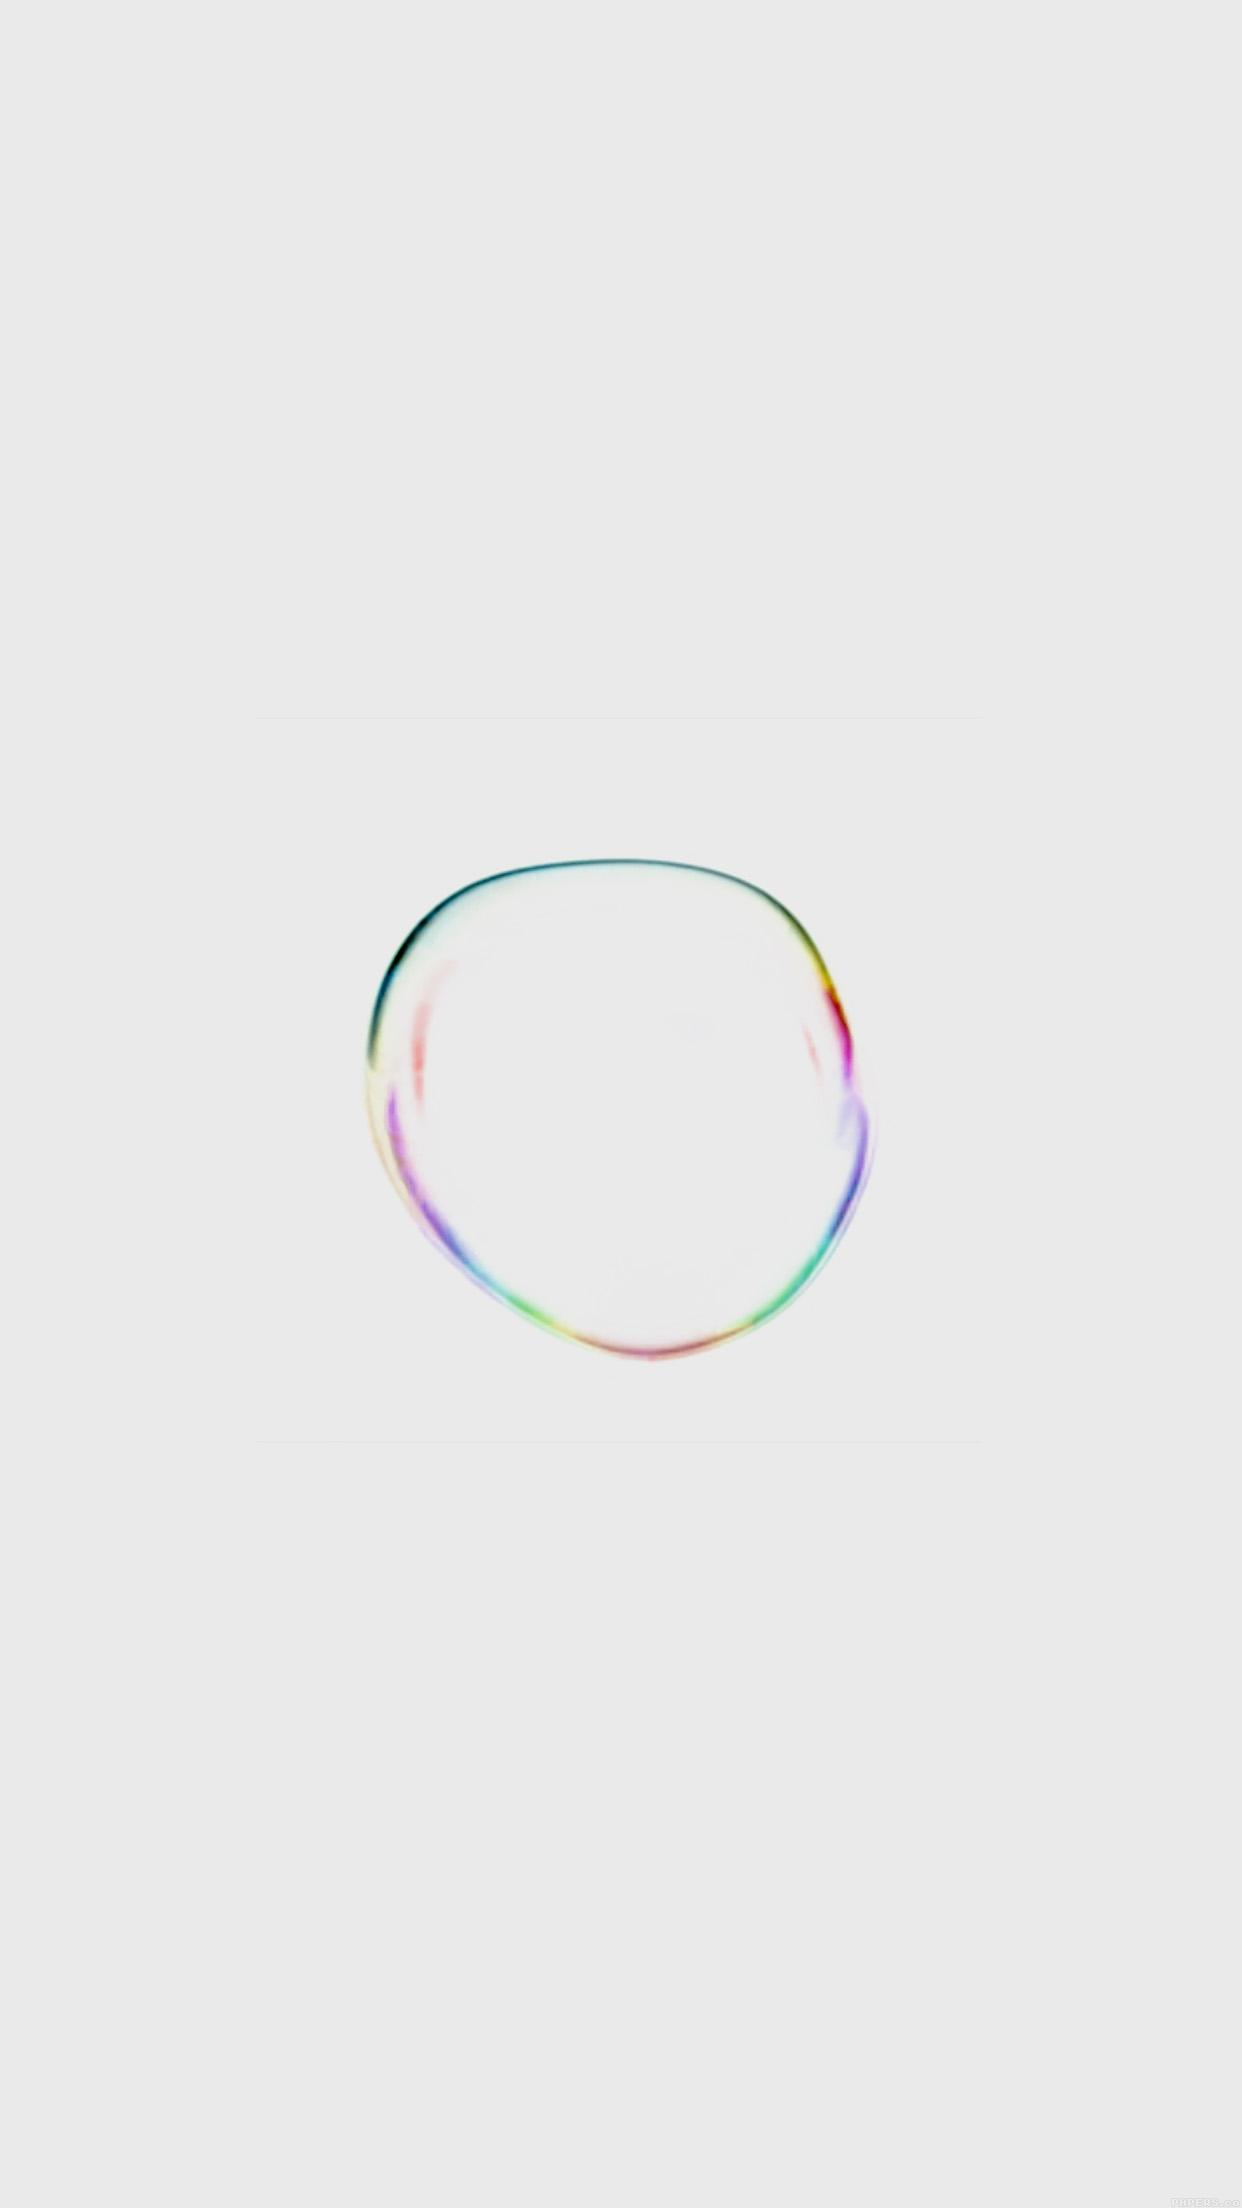 Apple Macbook Art Bubble White Android wallpaper